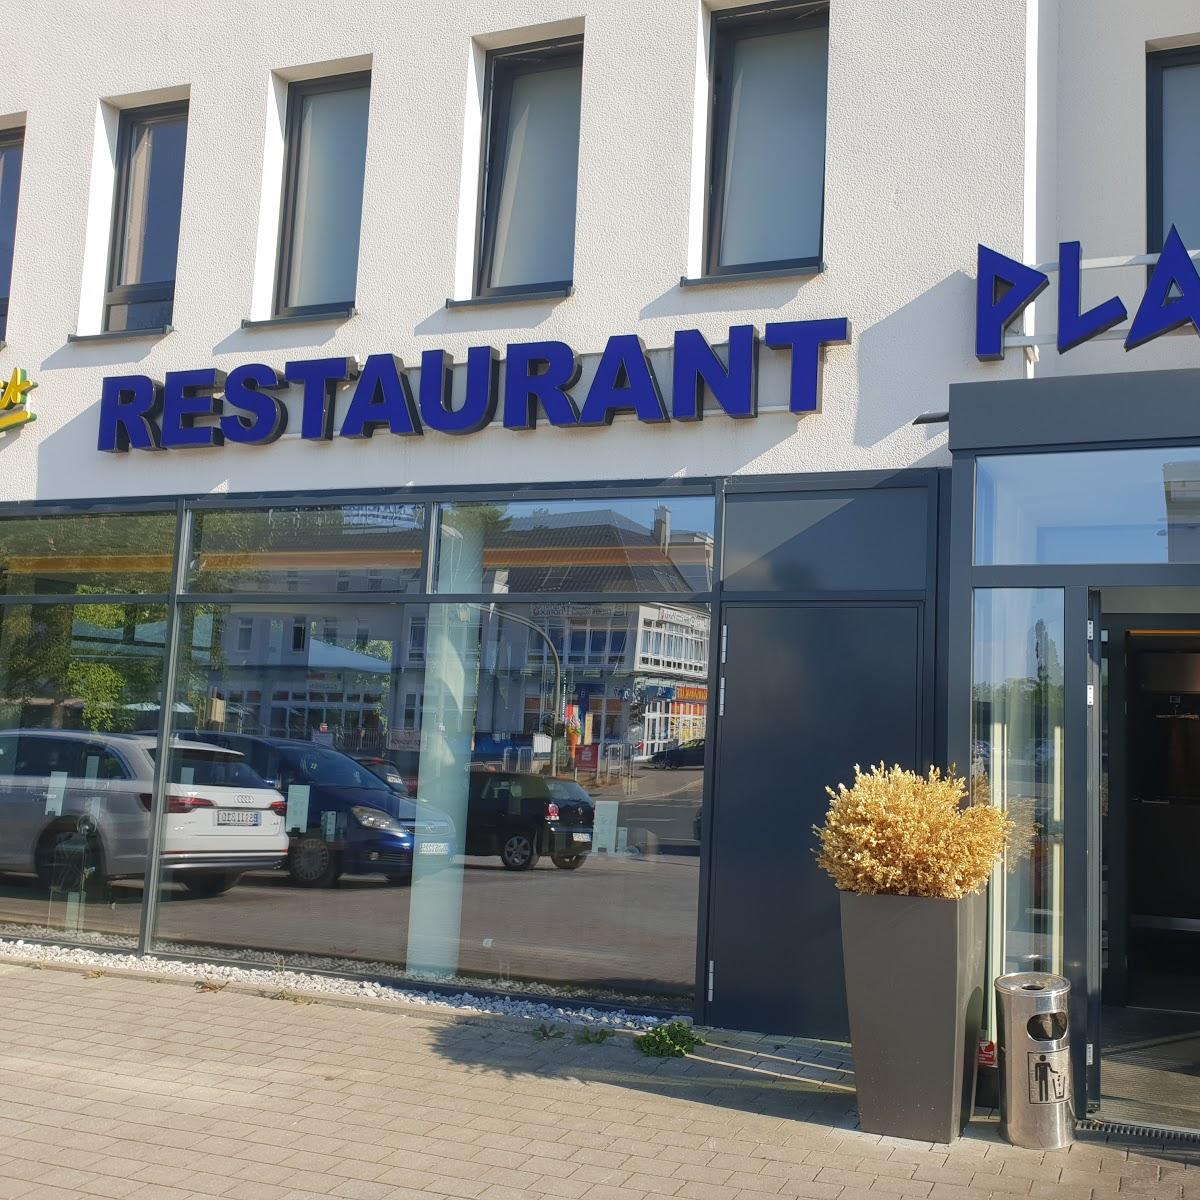 Restaurant "Grill Restaurant Platia Dortmund" in Dortmund